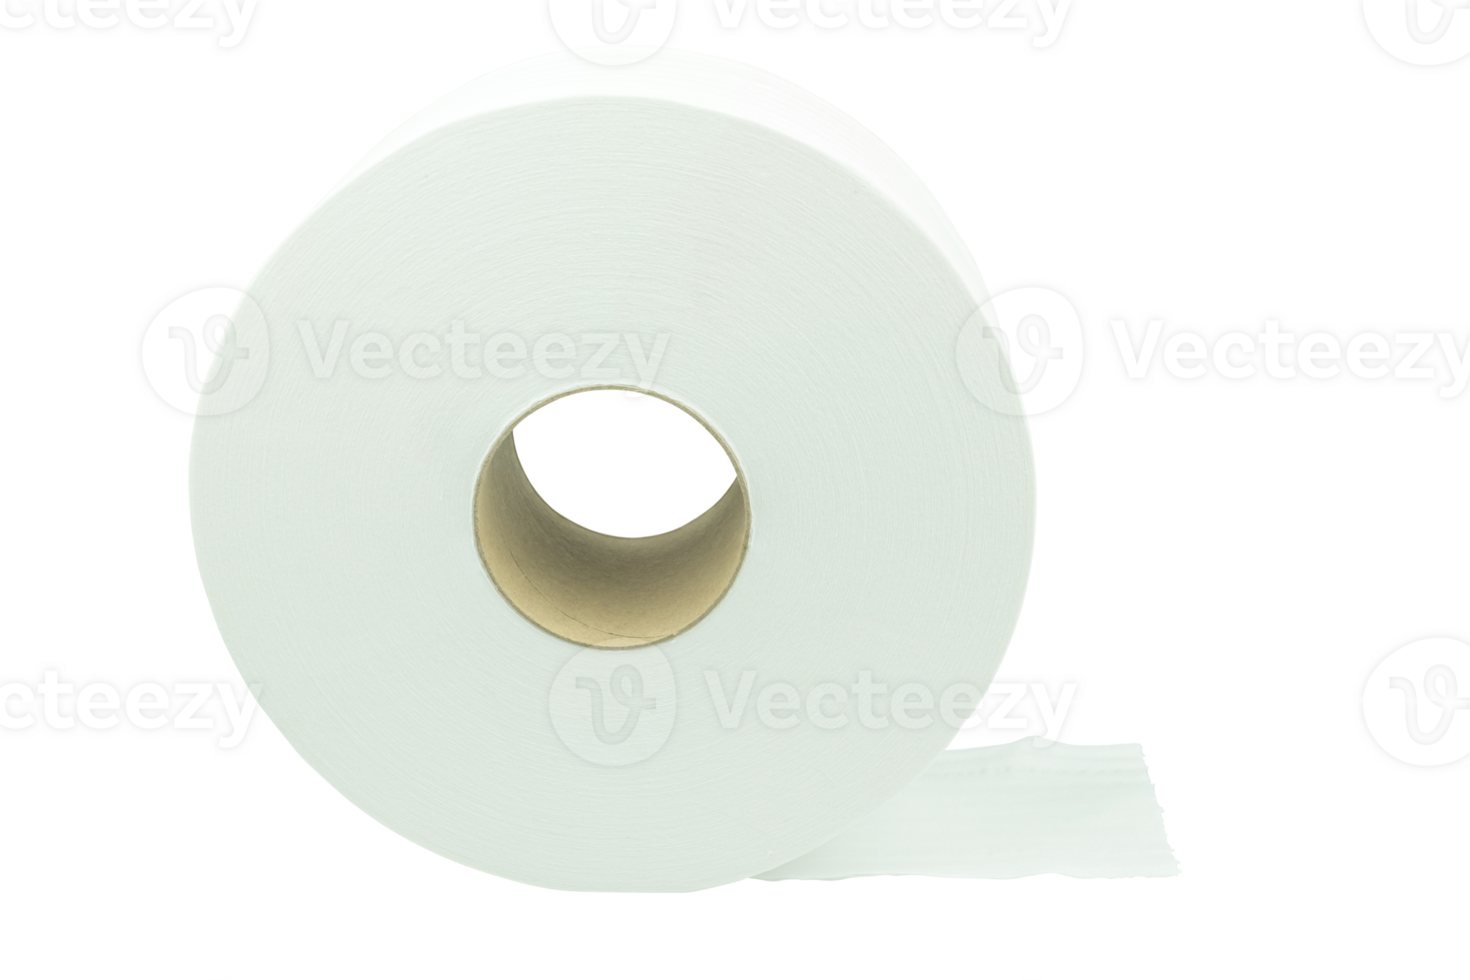 baño papel grande o pañuelo de papel rodar sanitario vertical y familiar, cerca arriba detalle de vertical limpiar baño papel rollo. pañuelo de papel es ligero papel o ligero crepe papel. en transparente fondo, png